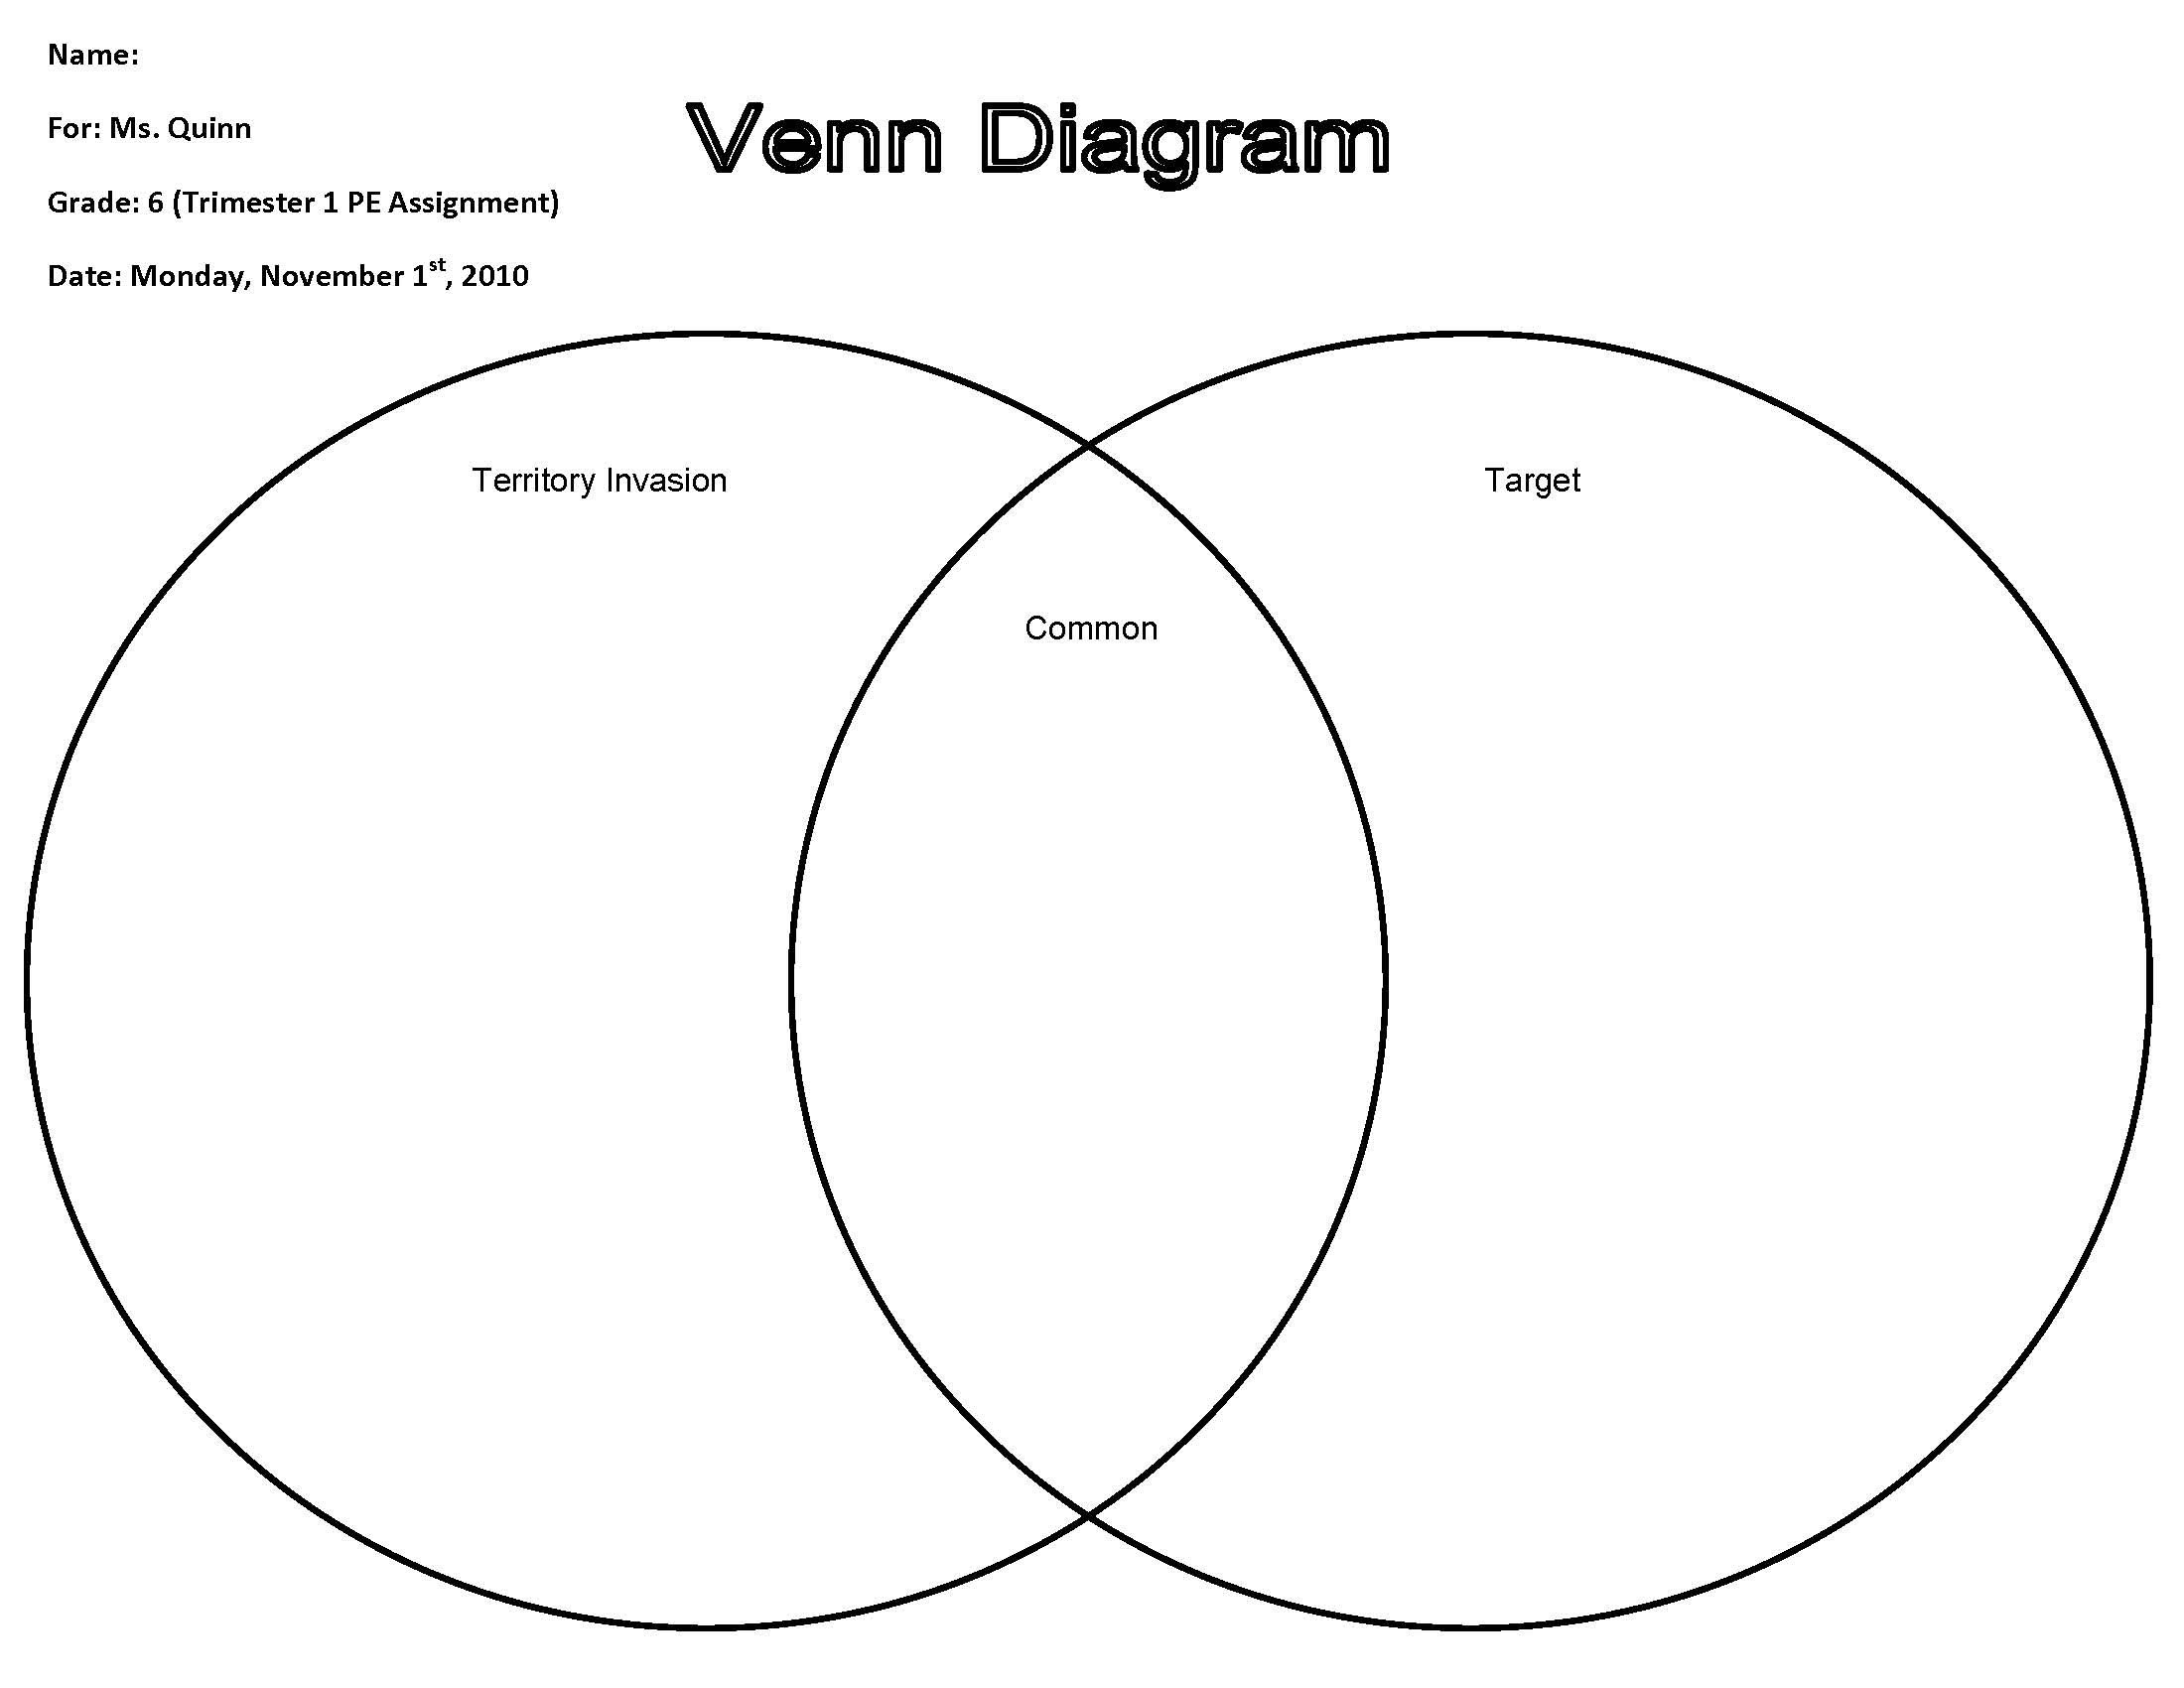 Venn Diagram In Word 9 Venn Diagram Worksheet Templates Free Sample Example